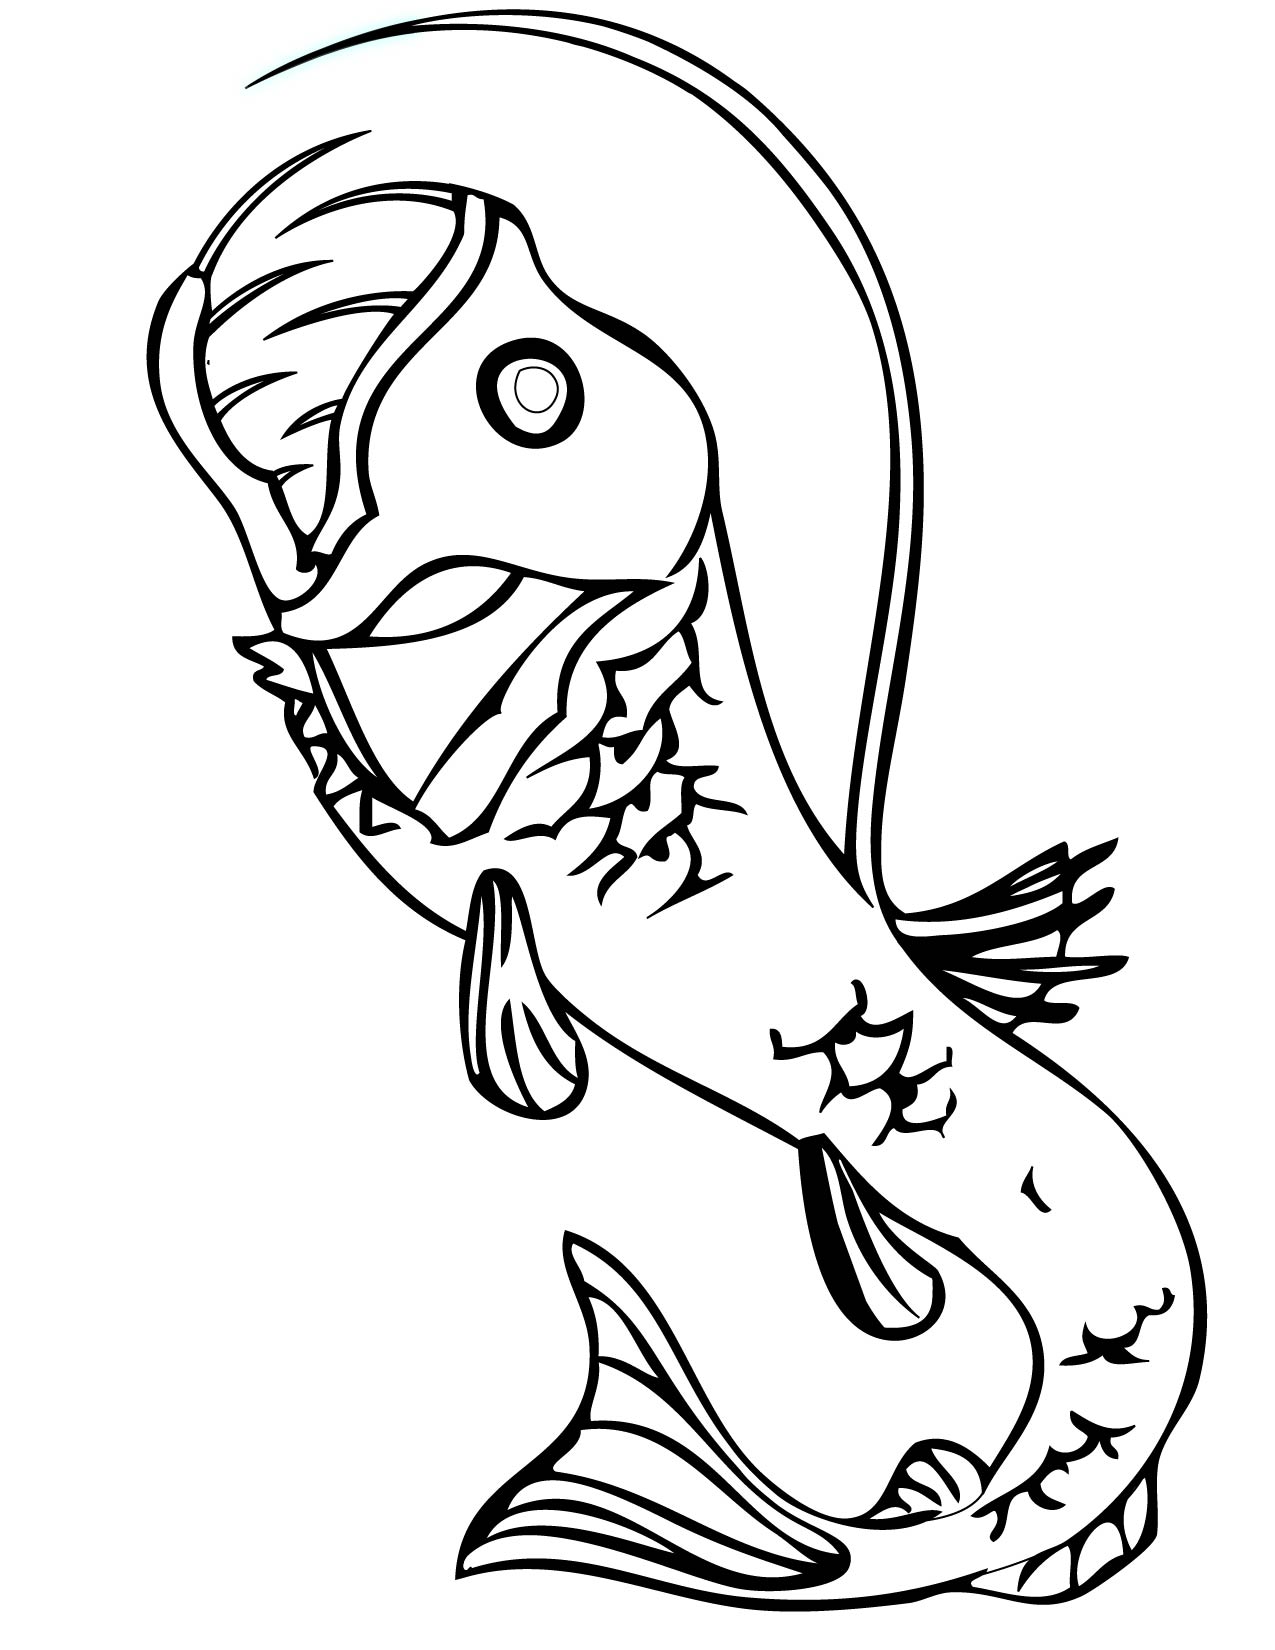 Viperfish coloring #12, Download drawings